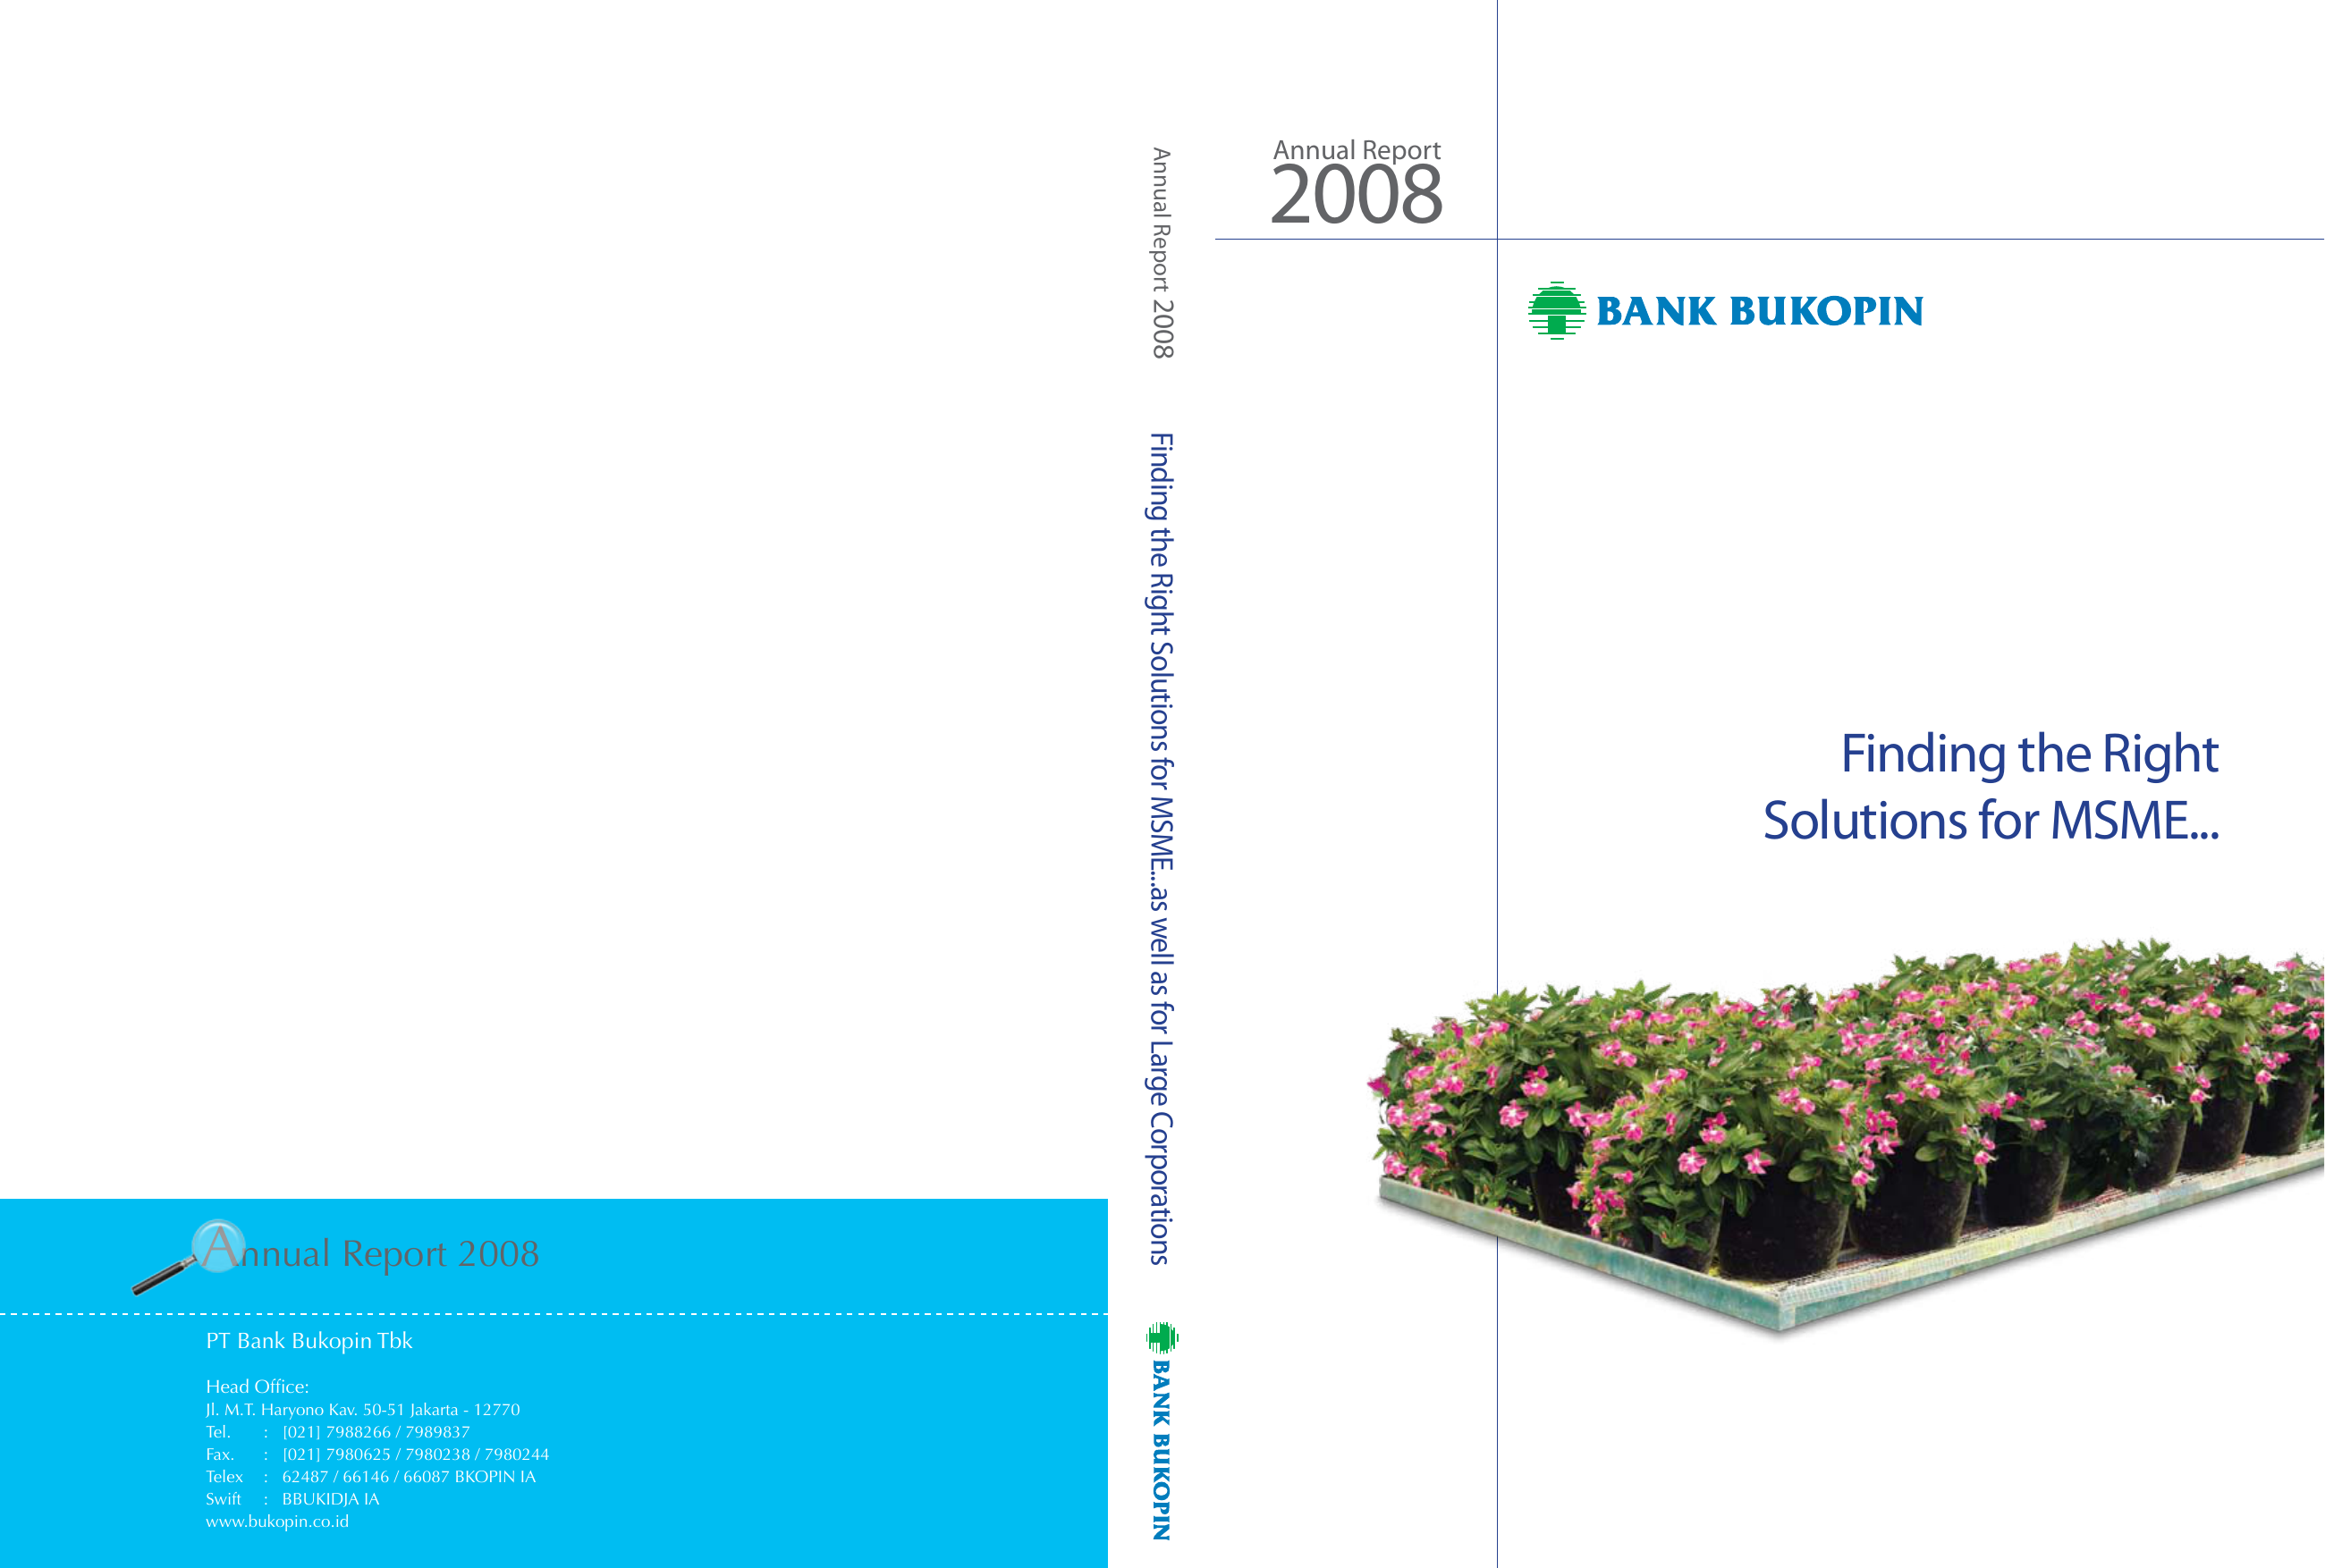 Annual Report 2008 PT Bank Bukopin Tbk Head fice Jl M T Haryono Kav 50 51 Jakarta Tel [021] Fax